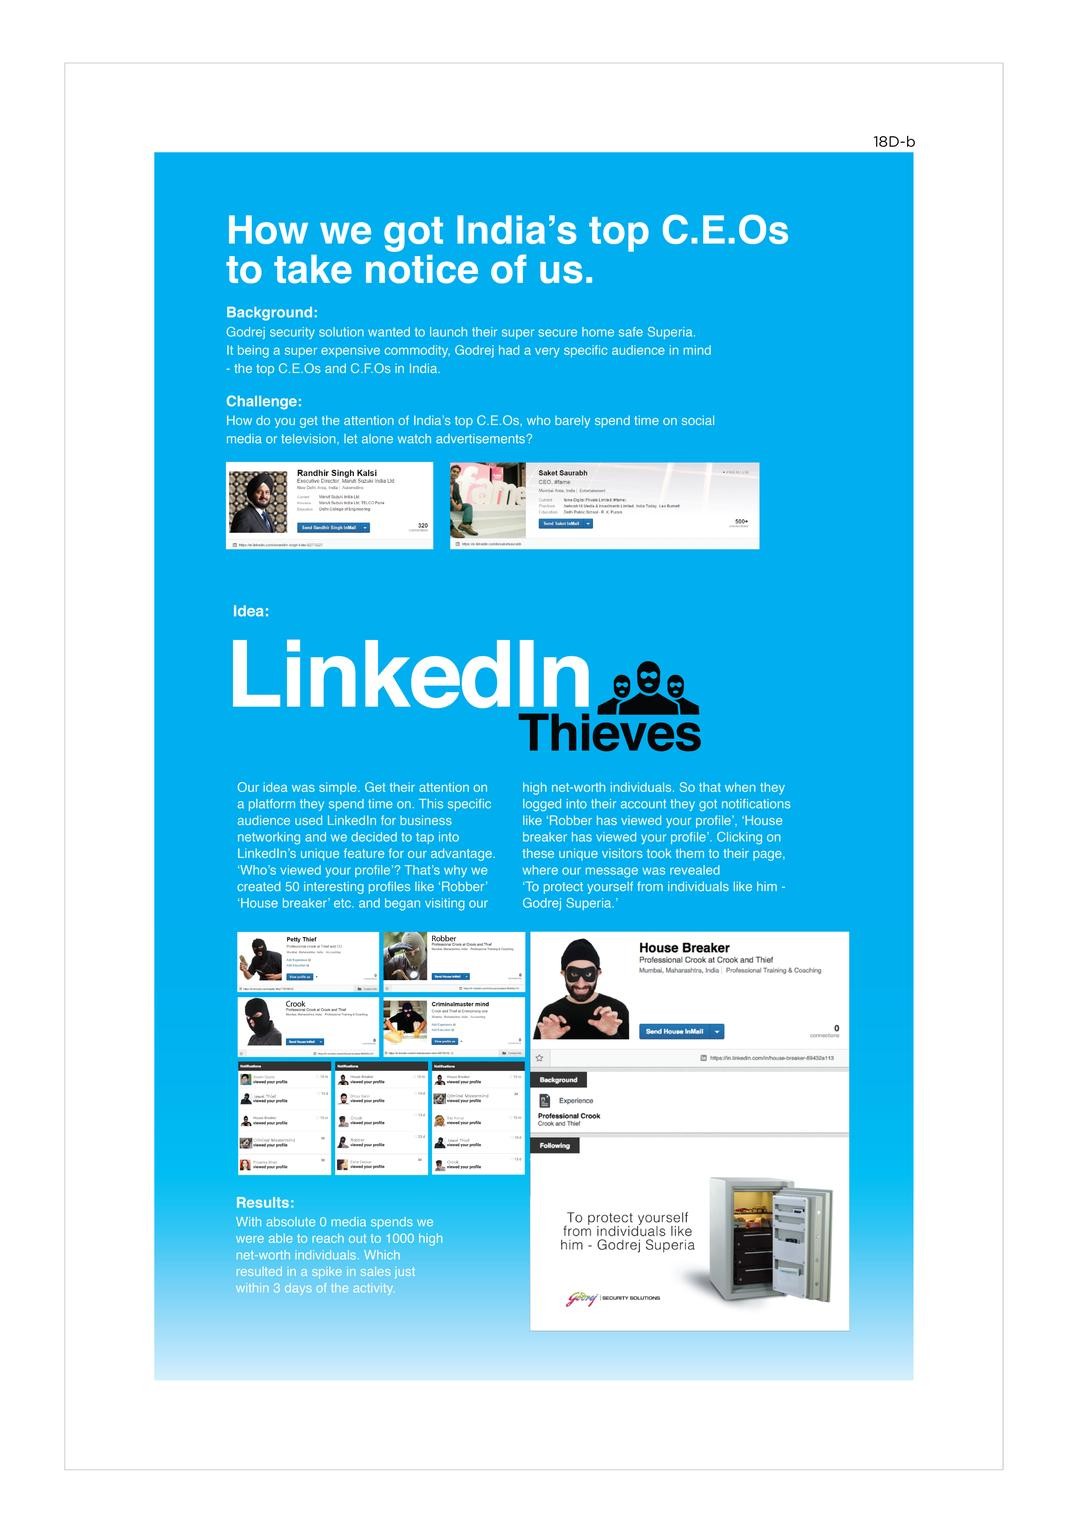 LinkedIn Thieves